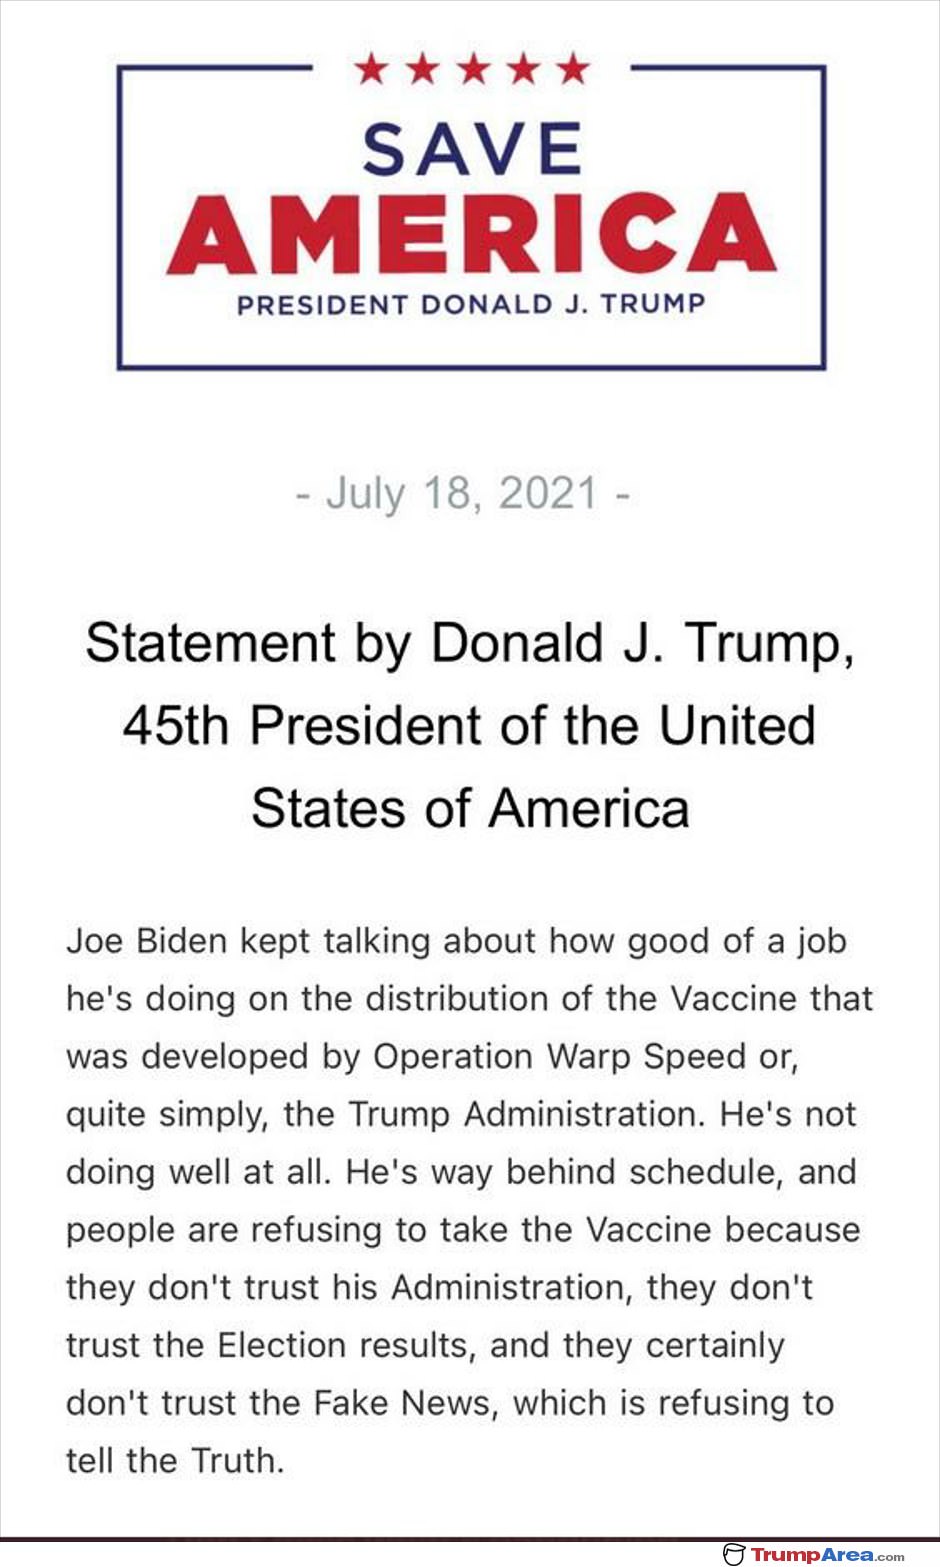 Joe Biden Is Fake News